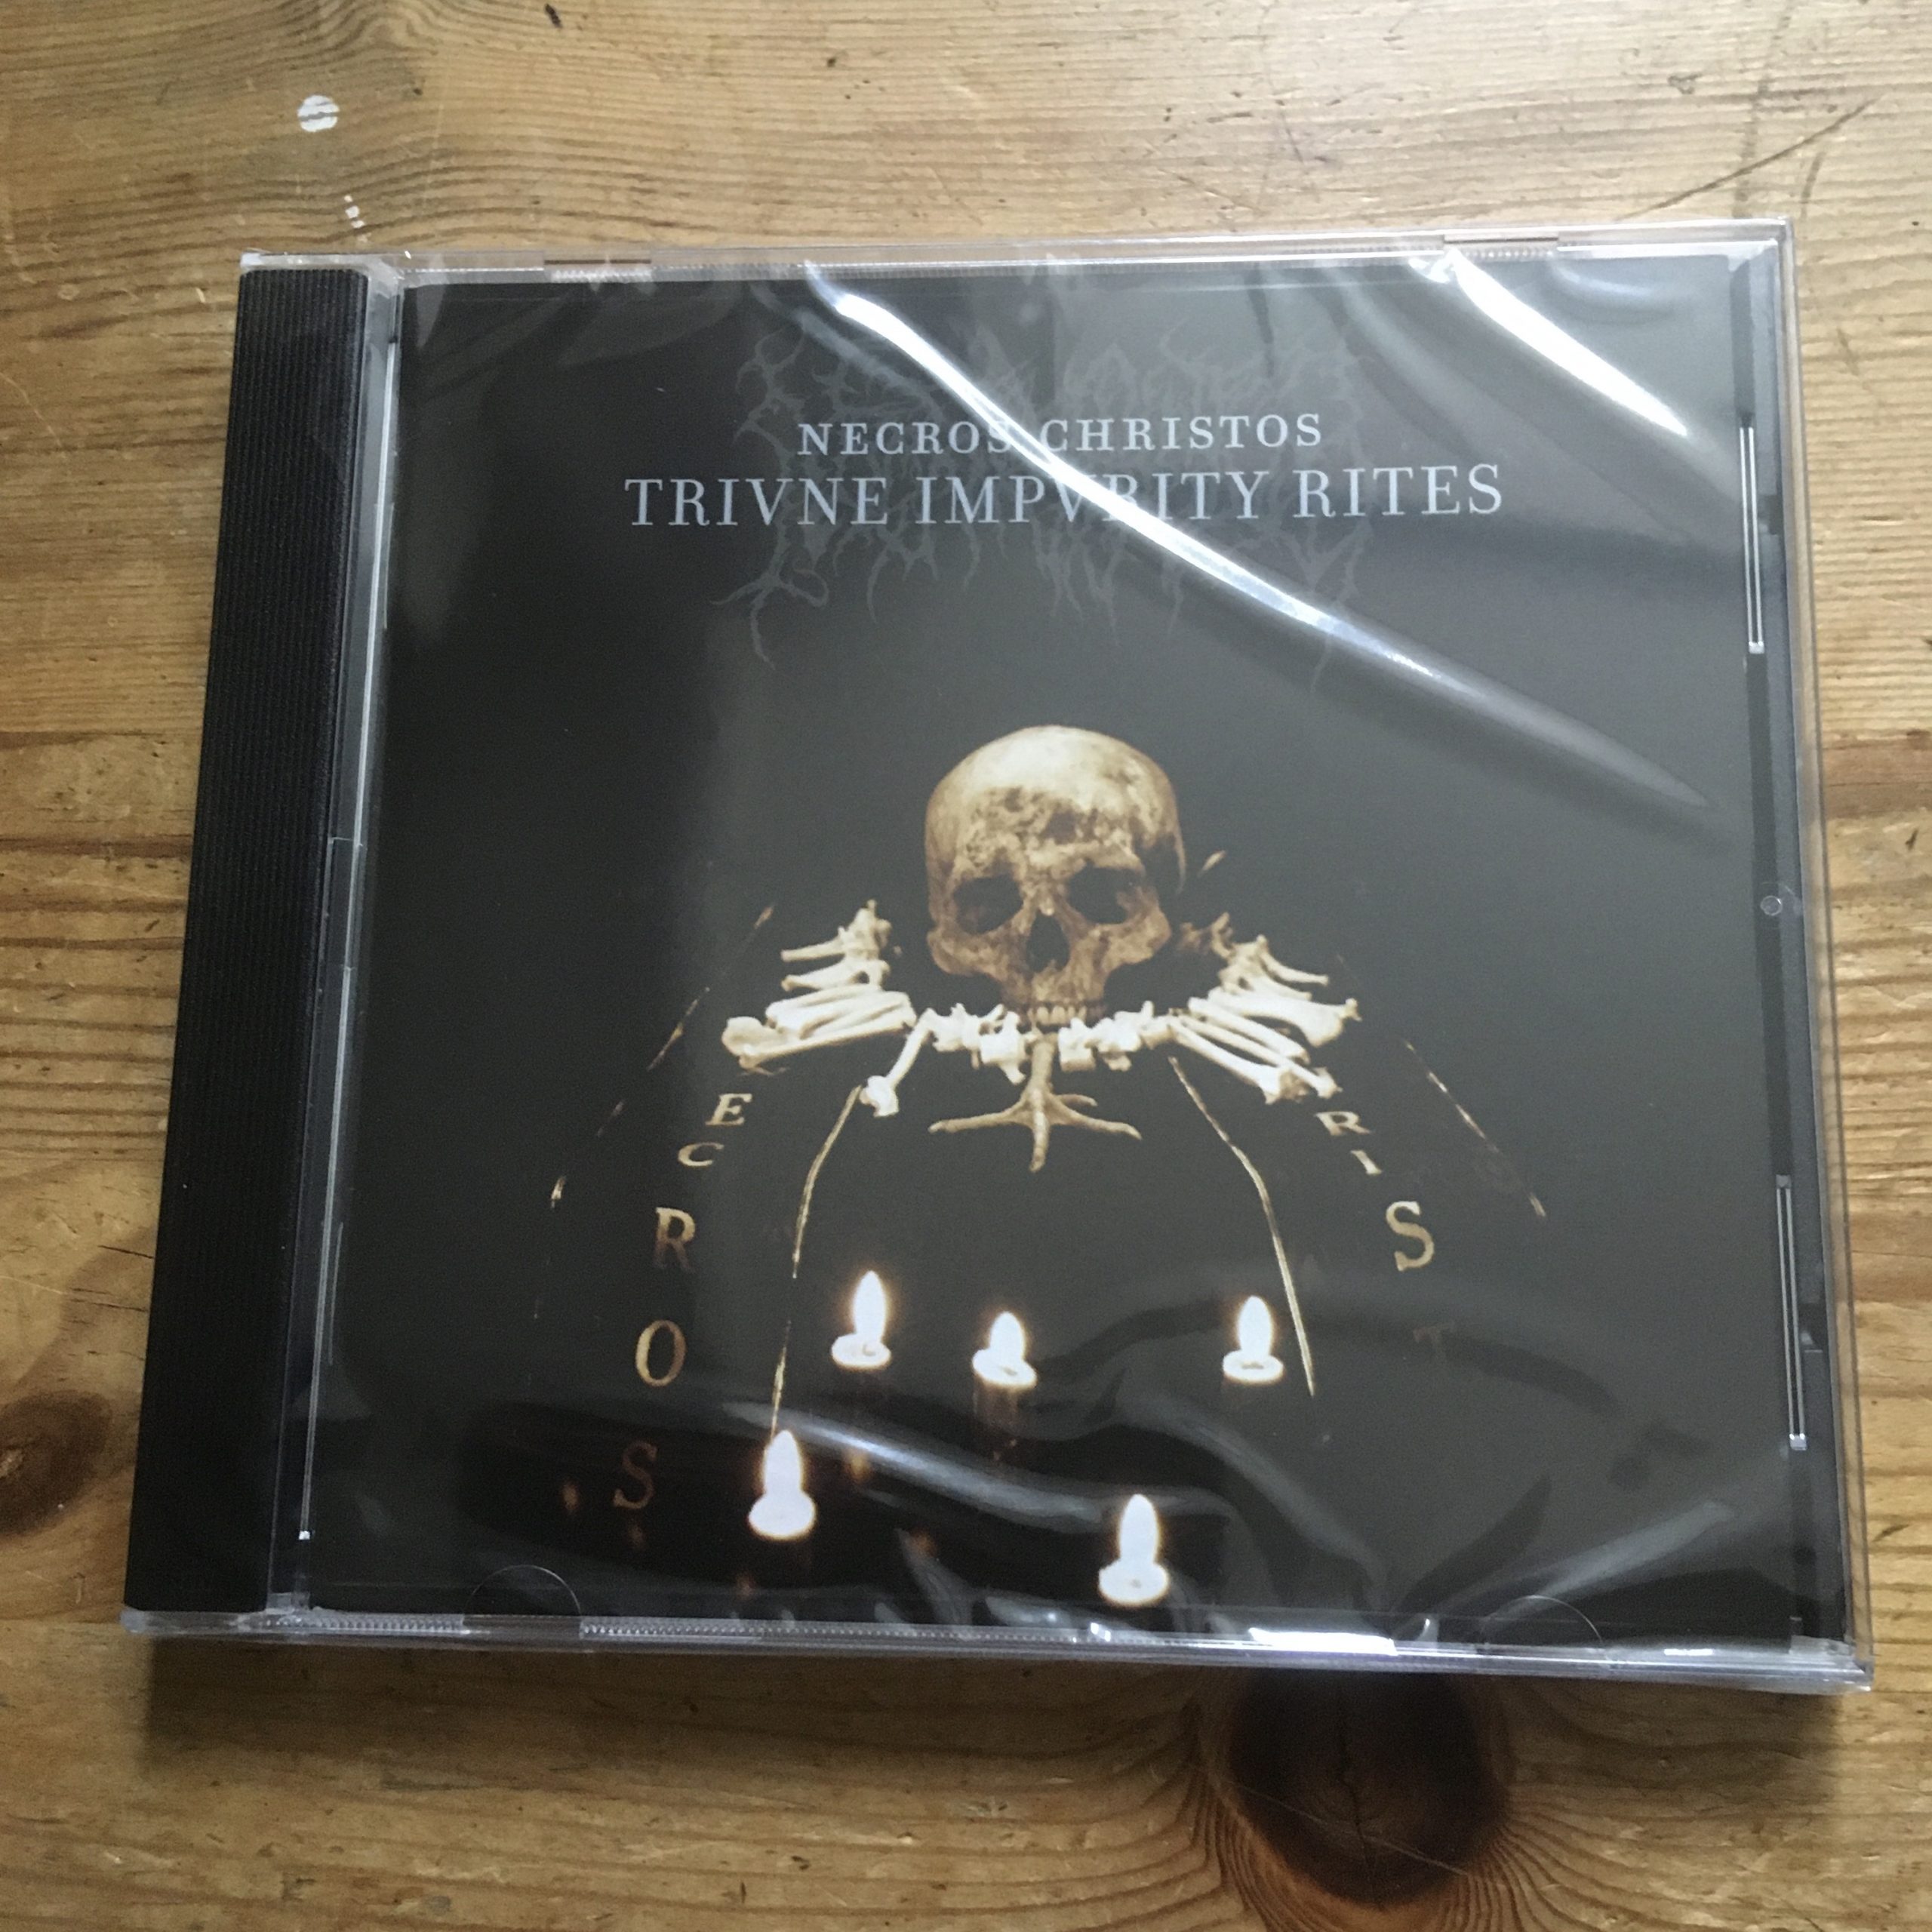 Photo of the Necros Christos - "Trivne Impvrity Rites" CD